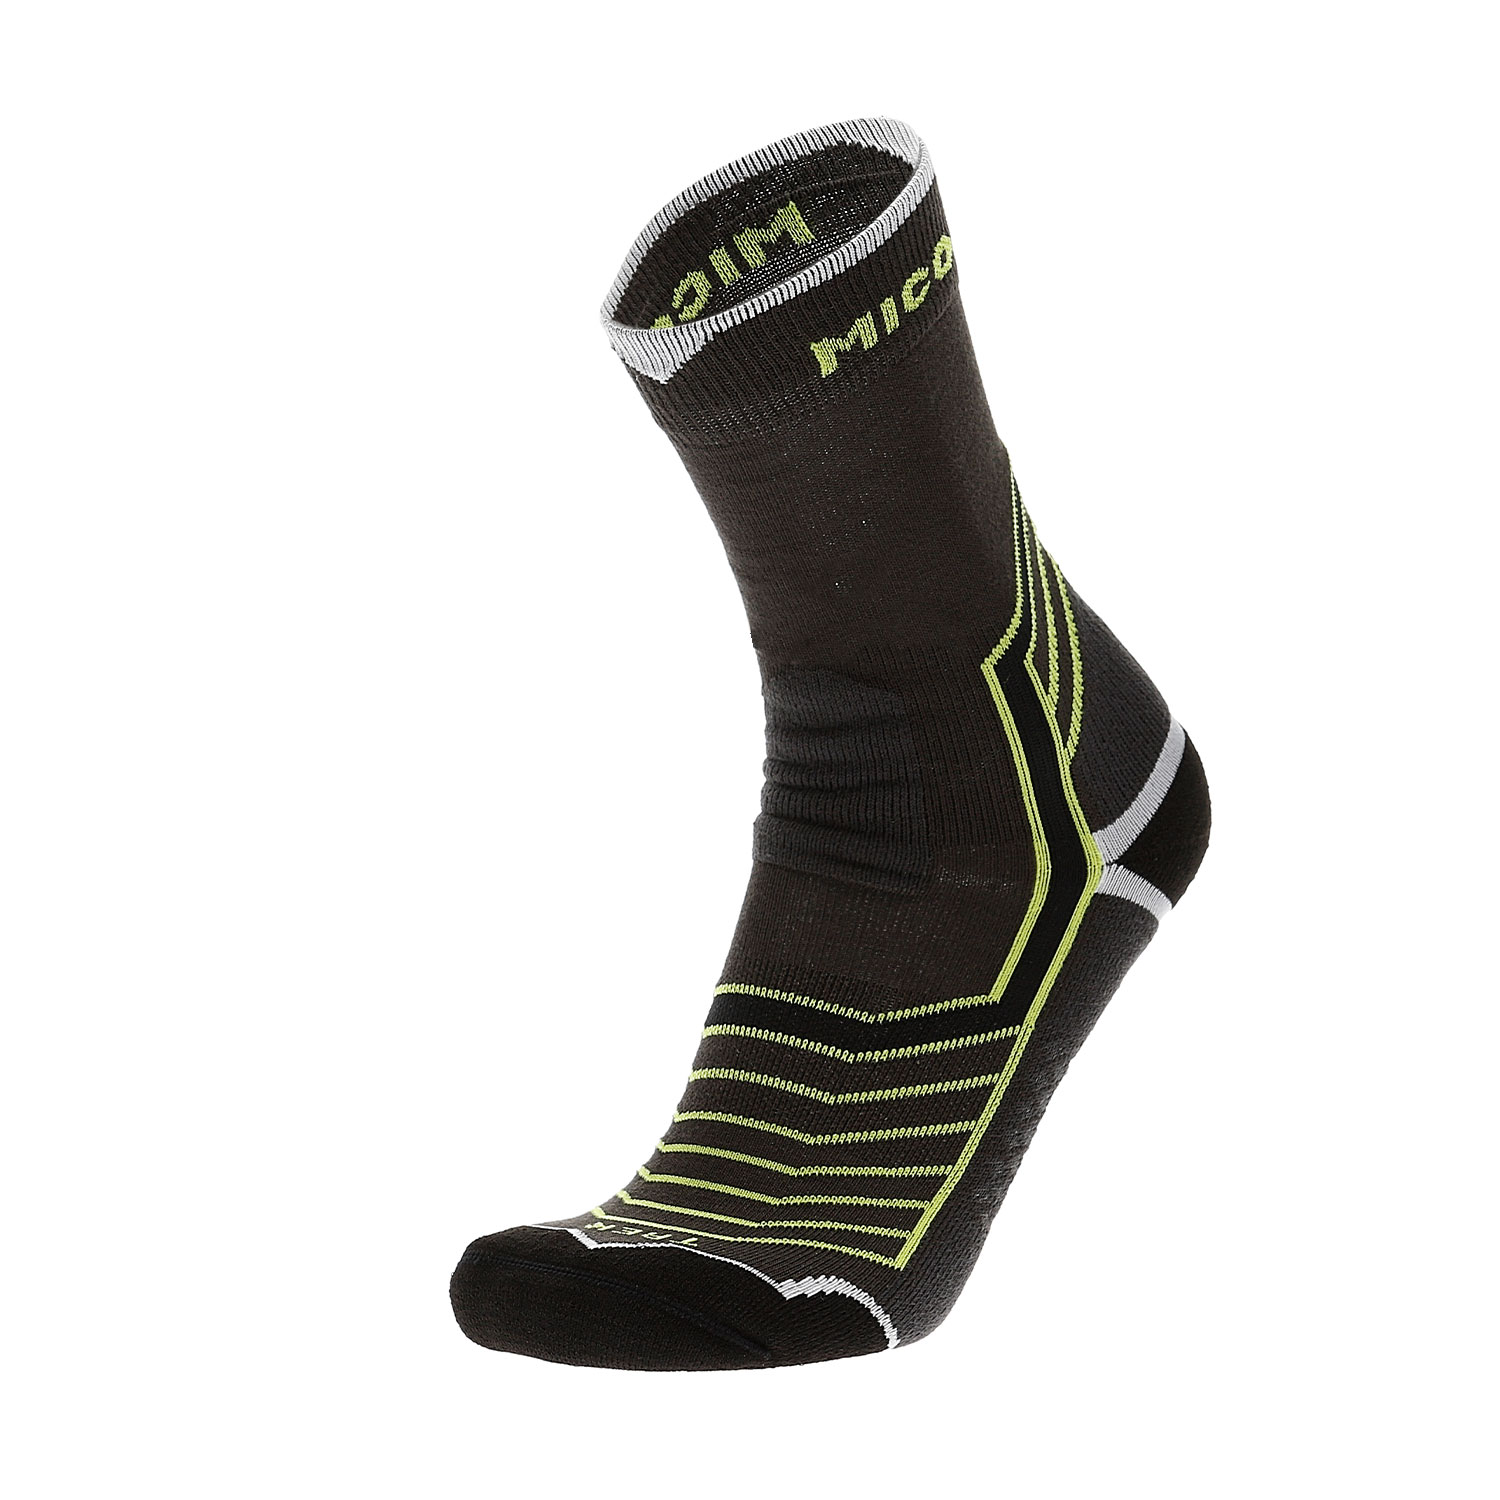 Mico X-Static Odor Zero Socks - Antracite/Giallo/Fluo